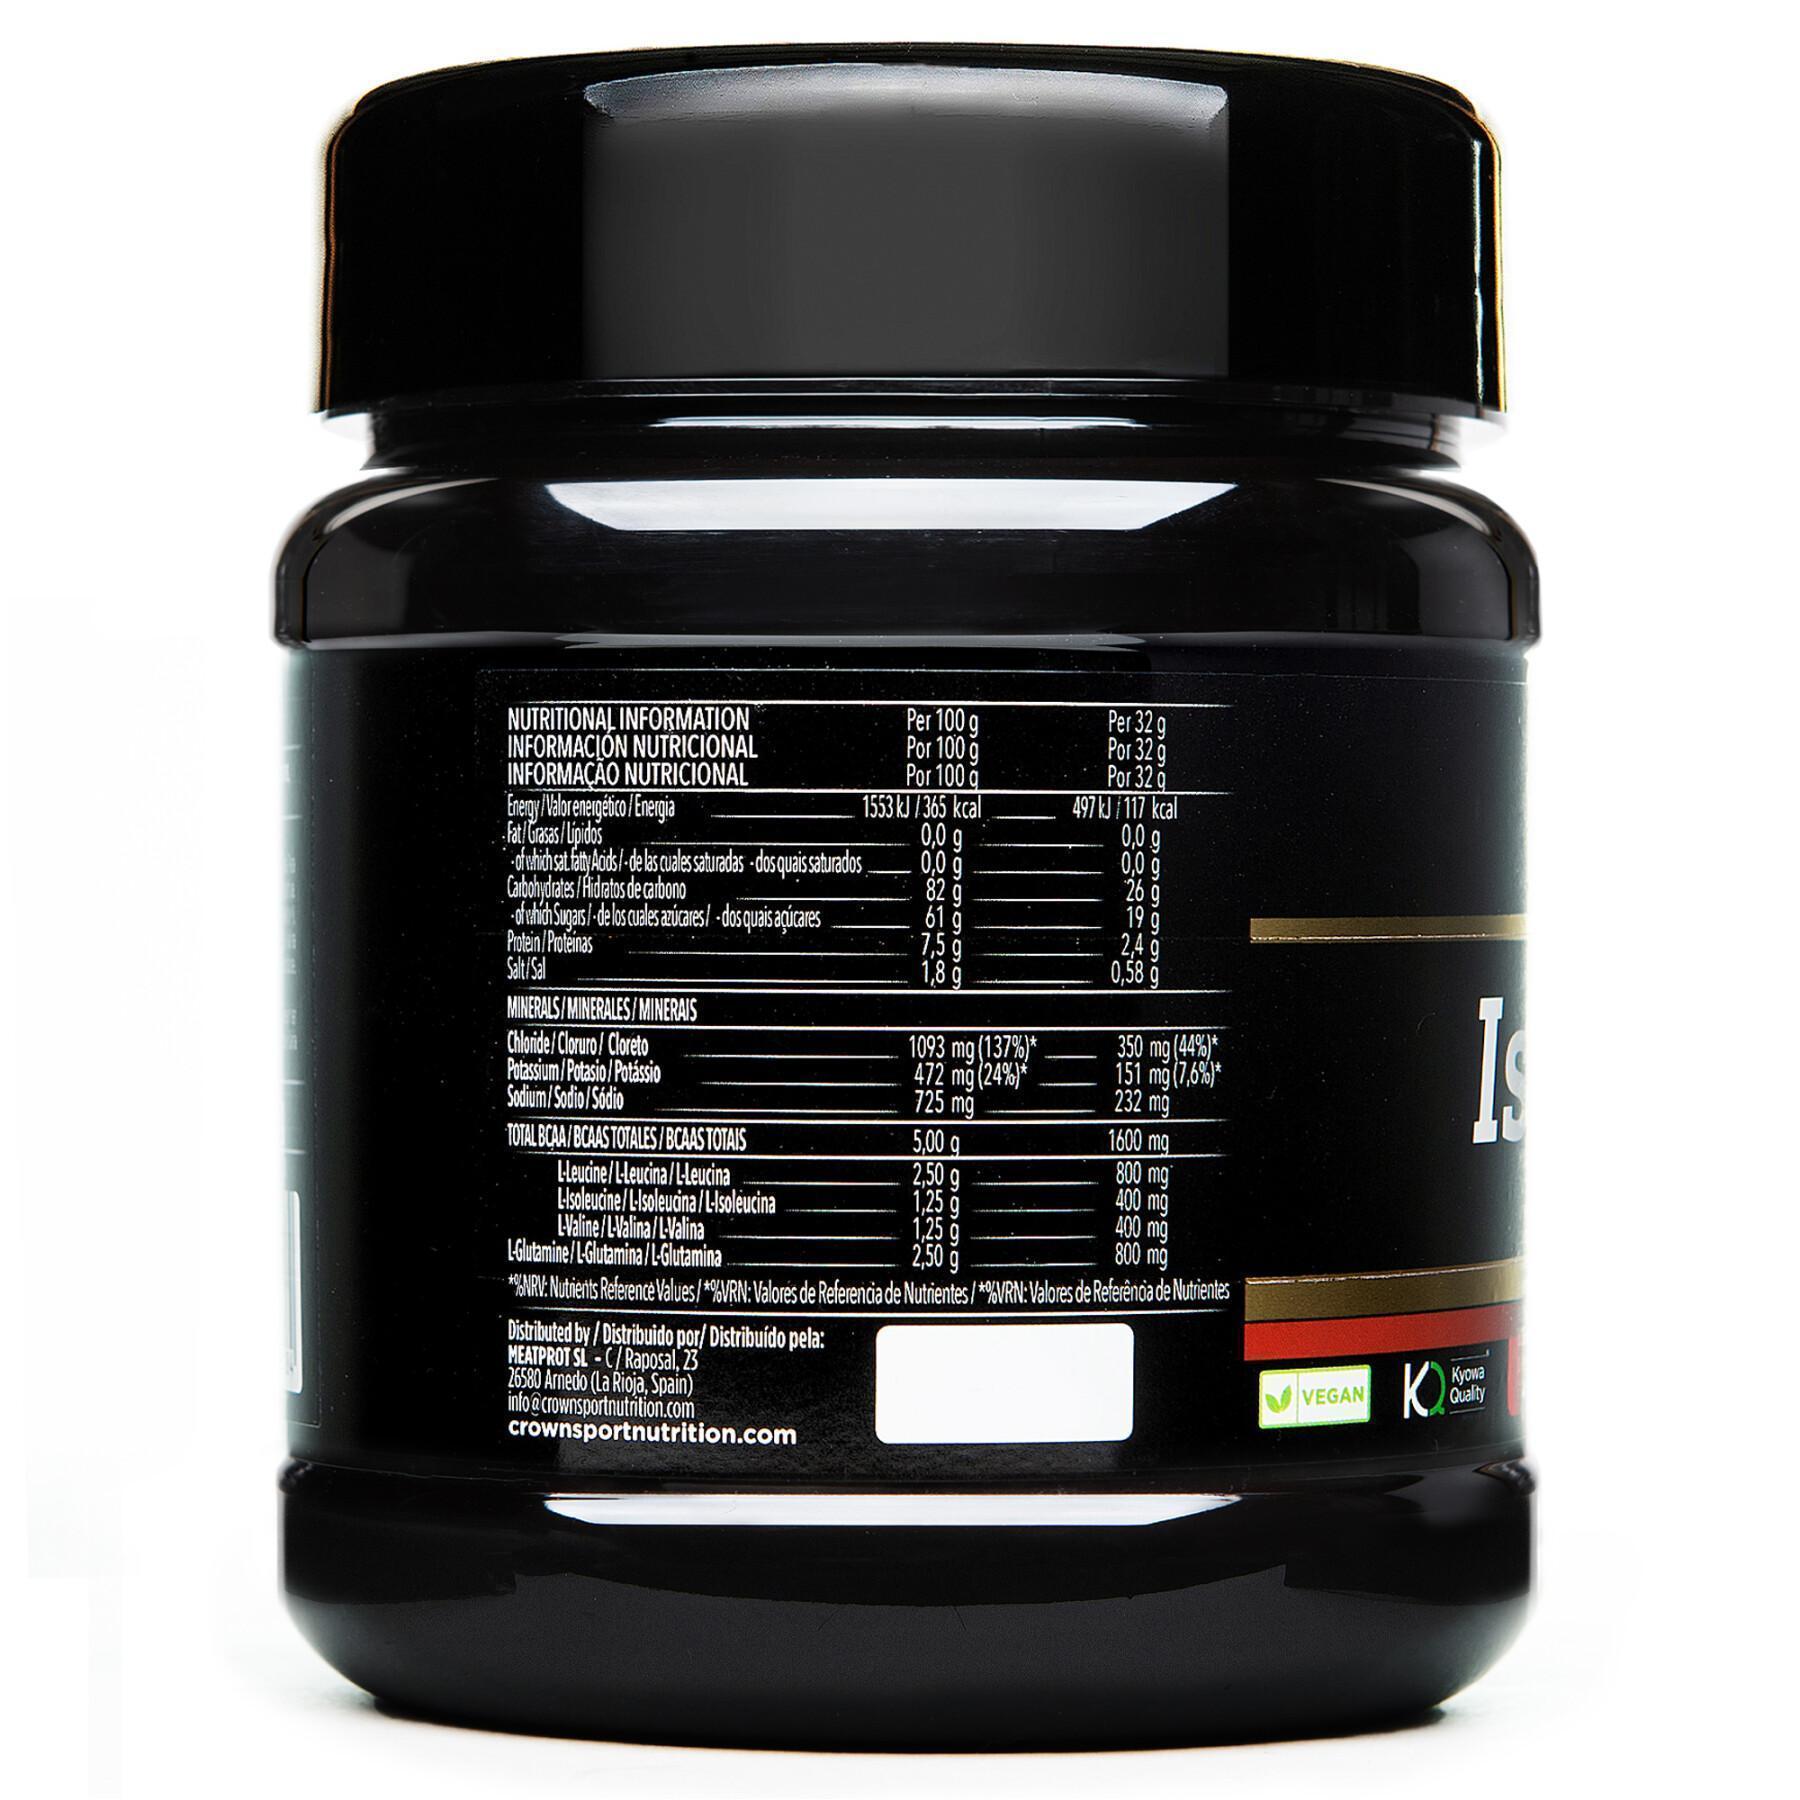 Energiedrank Crown Sport Nutrition Isodrink & Energy informed sport - fruits rouges - 640 g